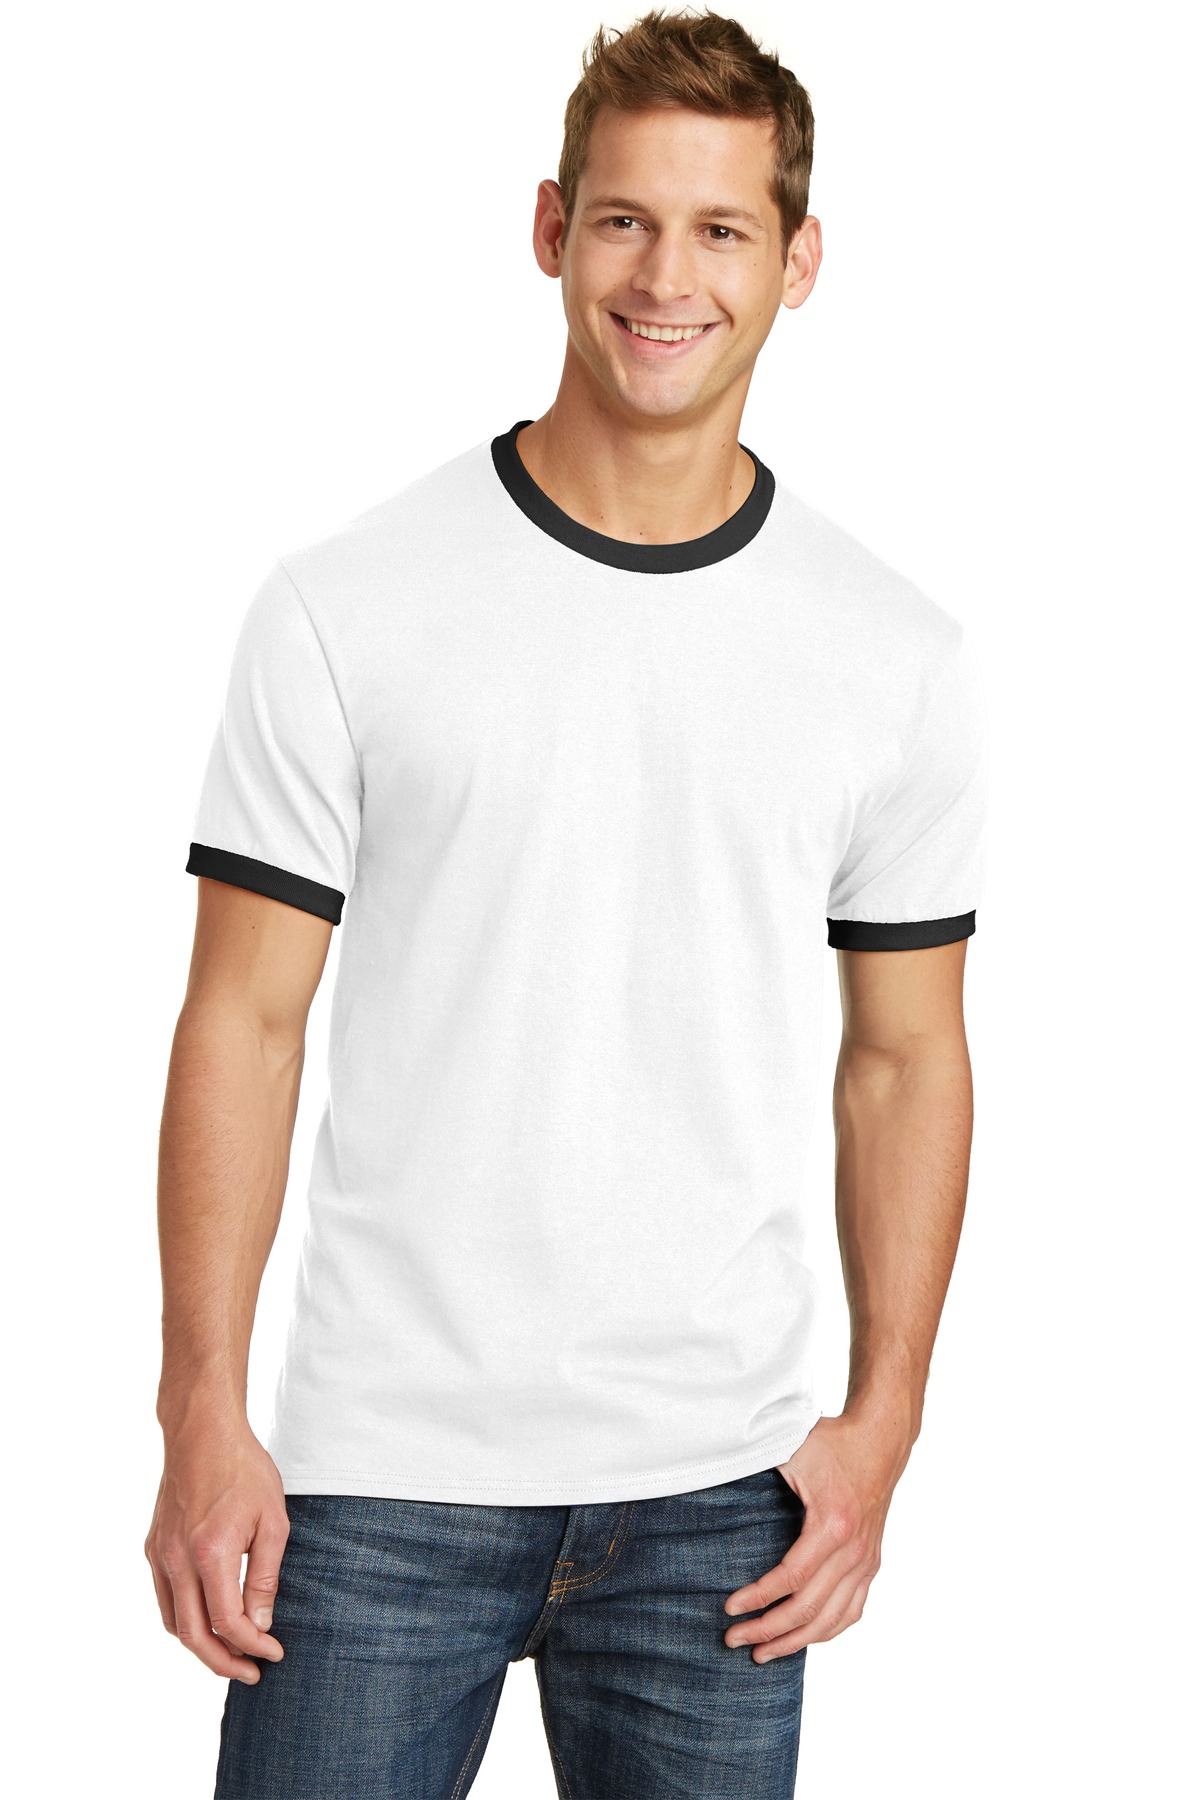 Port & Company Hospitality T-Shirts ® Core Cotton Ringer Tee.-Port & Company